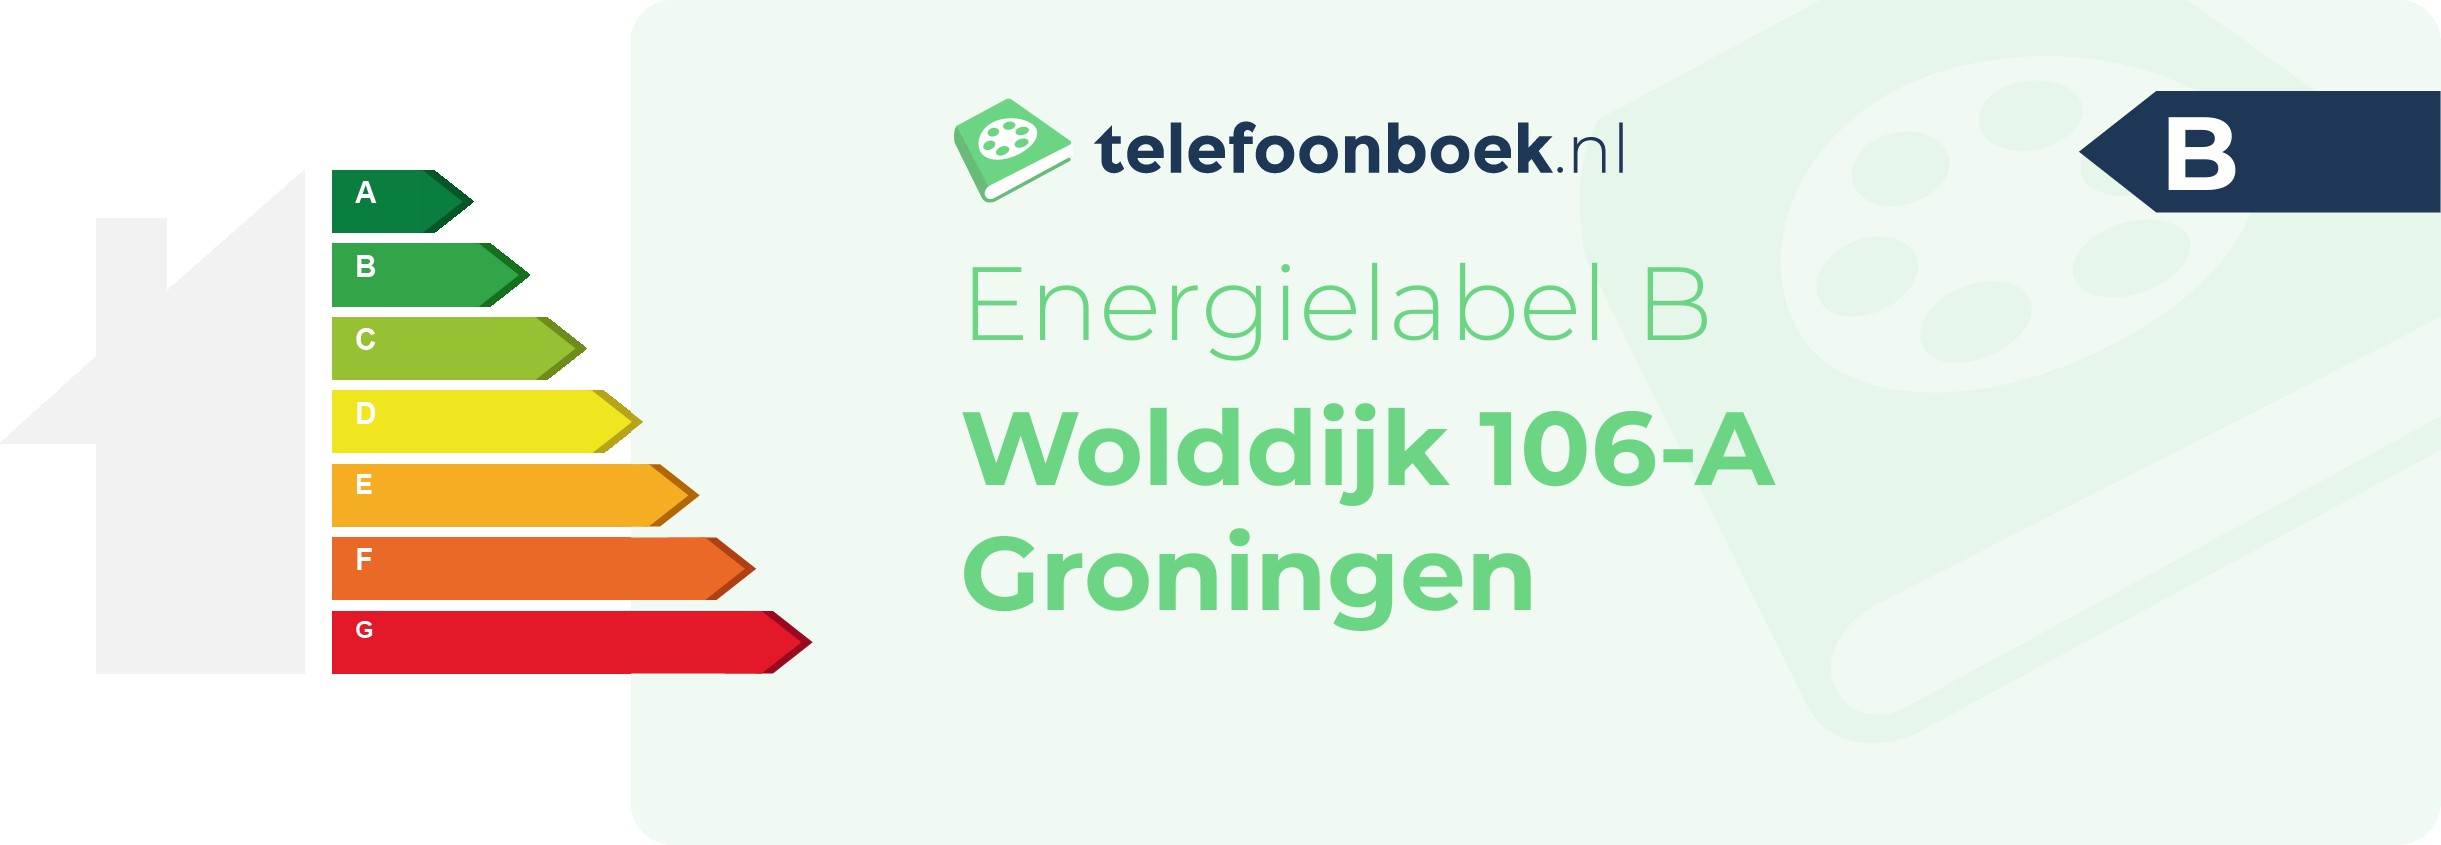 Energielabel Wolddijk 106-A Groningen